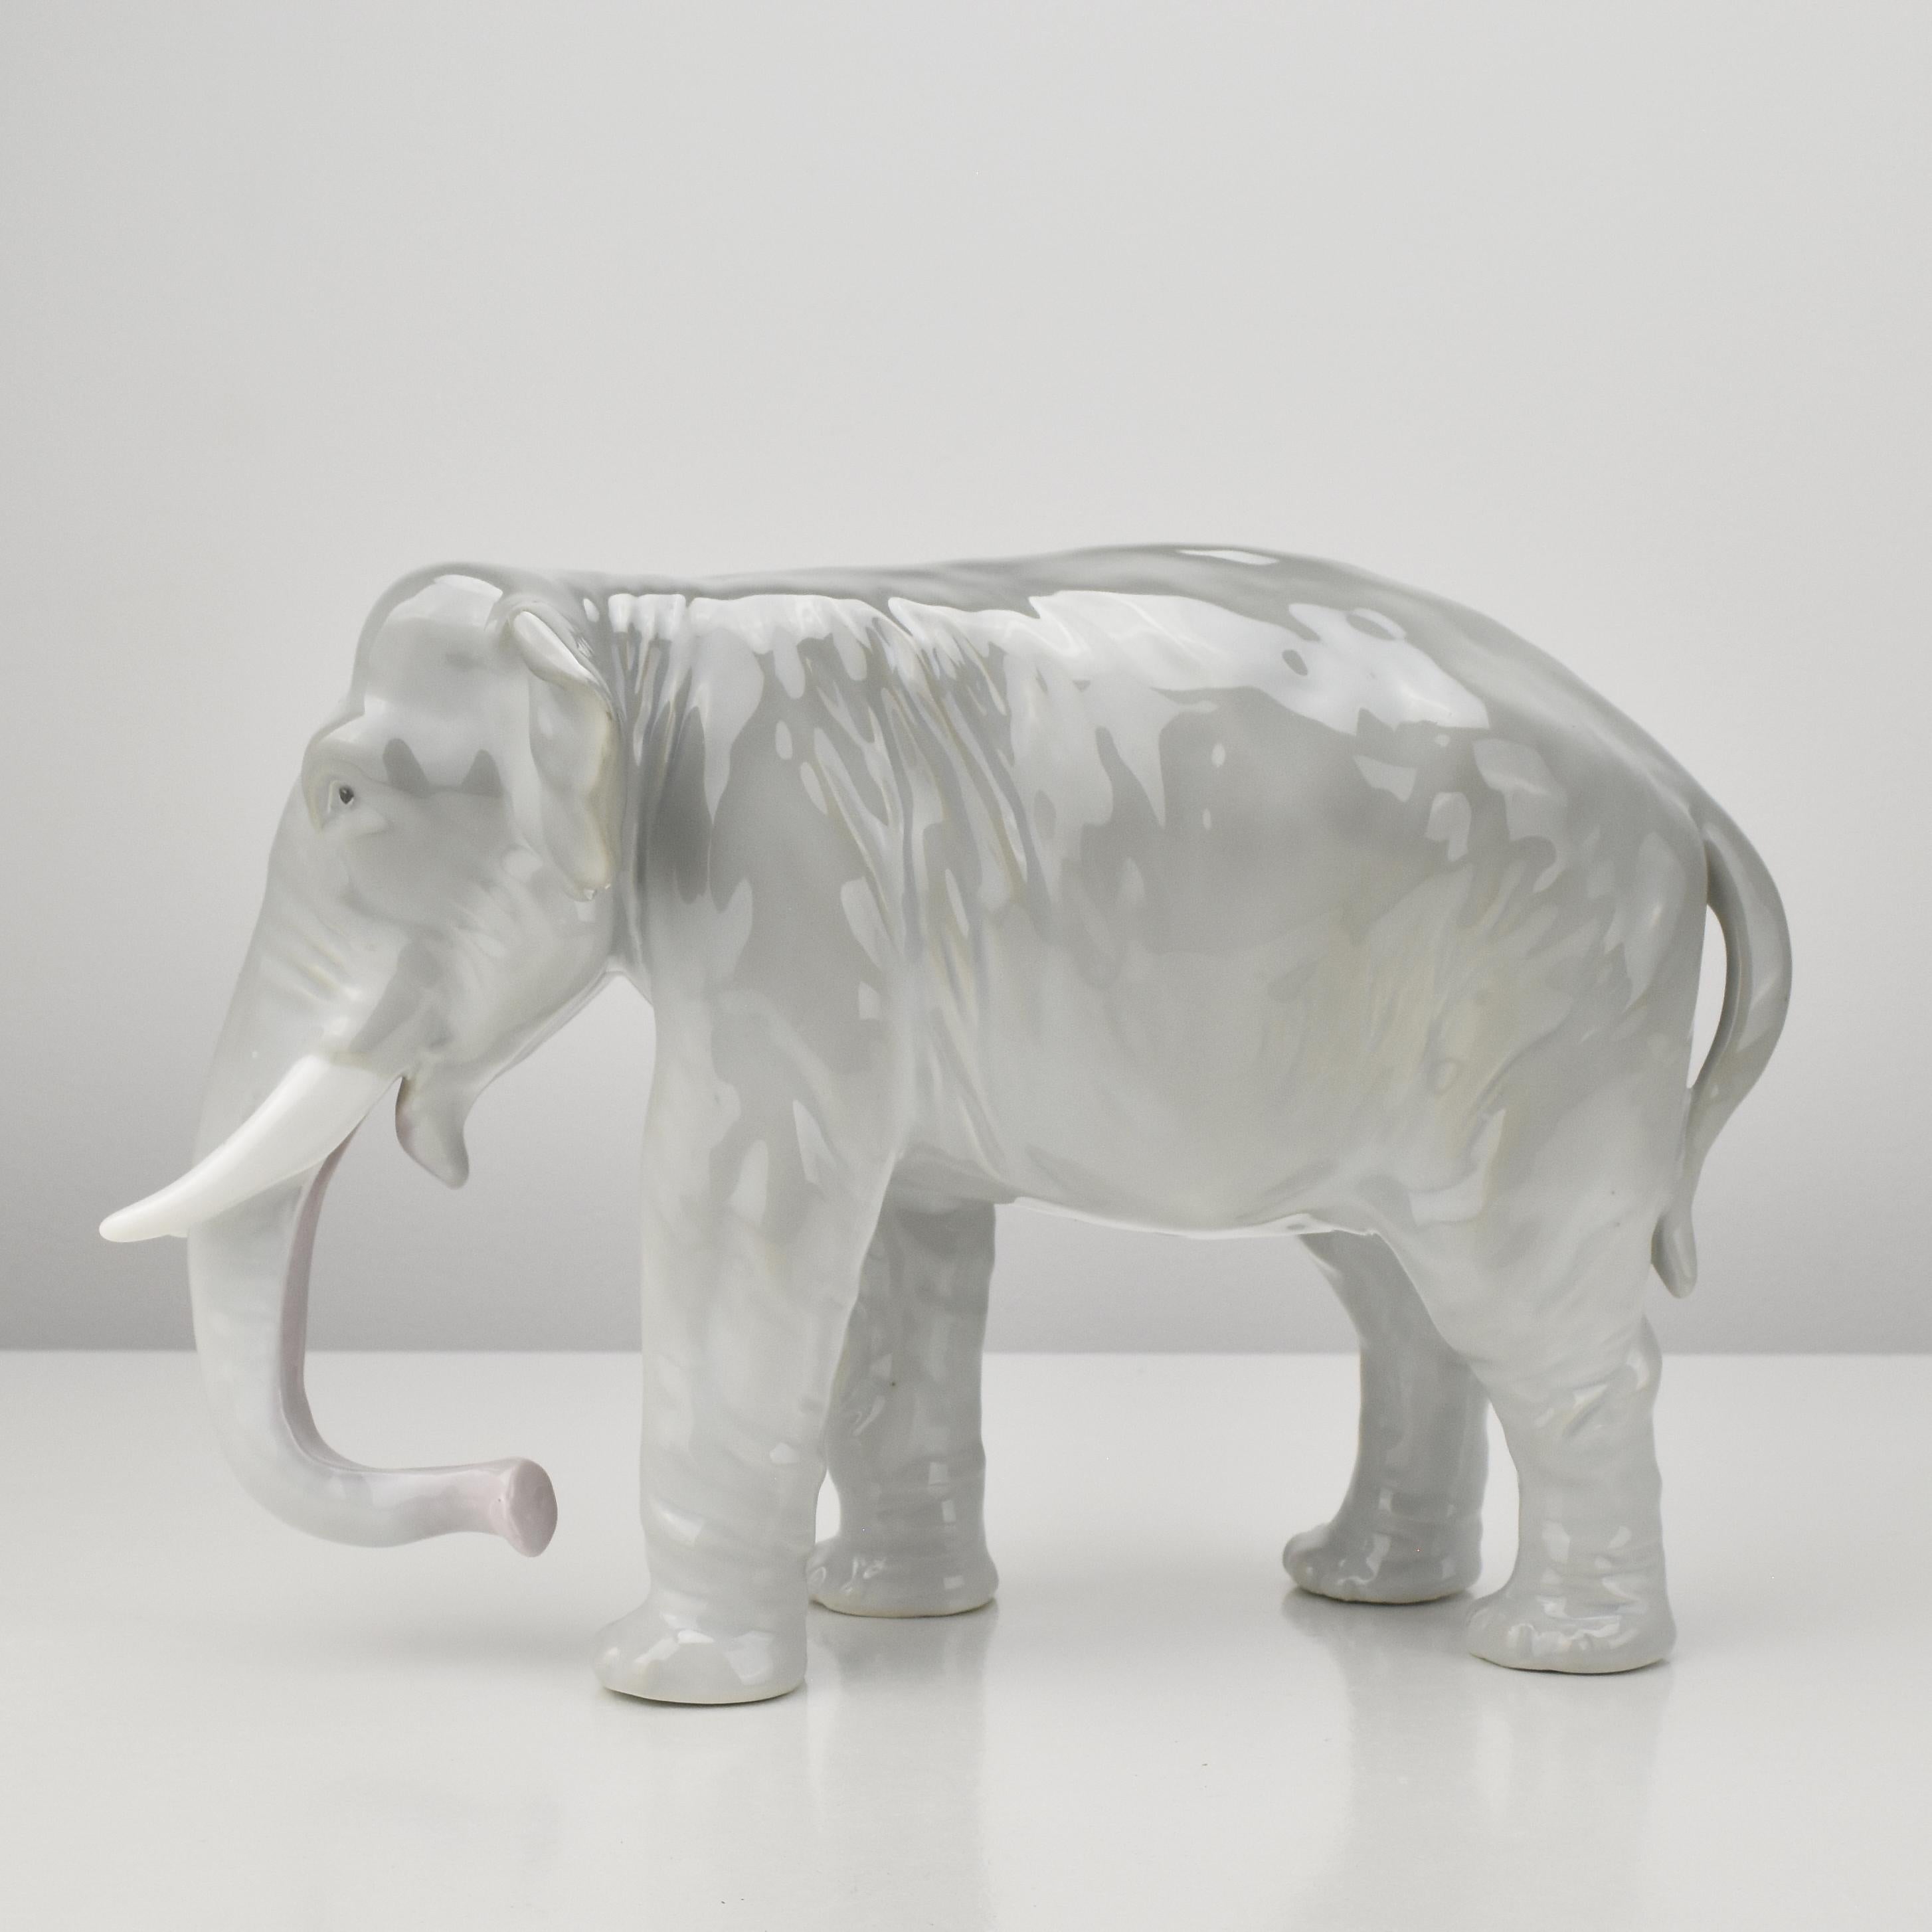 Antique Finely Crafted Elephant Porcelain Figurine Art Nouveau In Good Condition For Sale In Bad Säckingen, DE